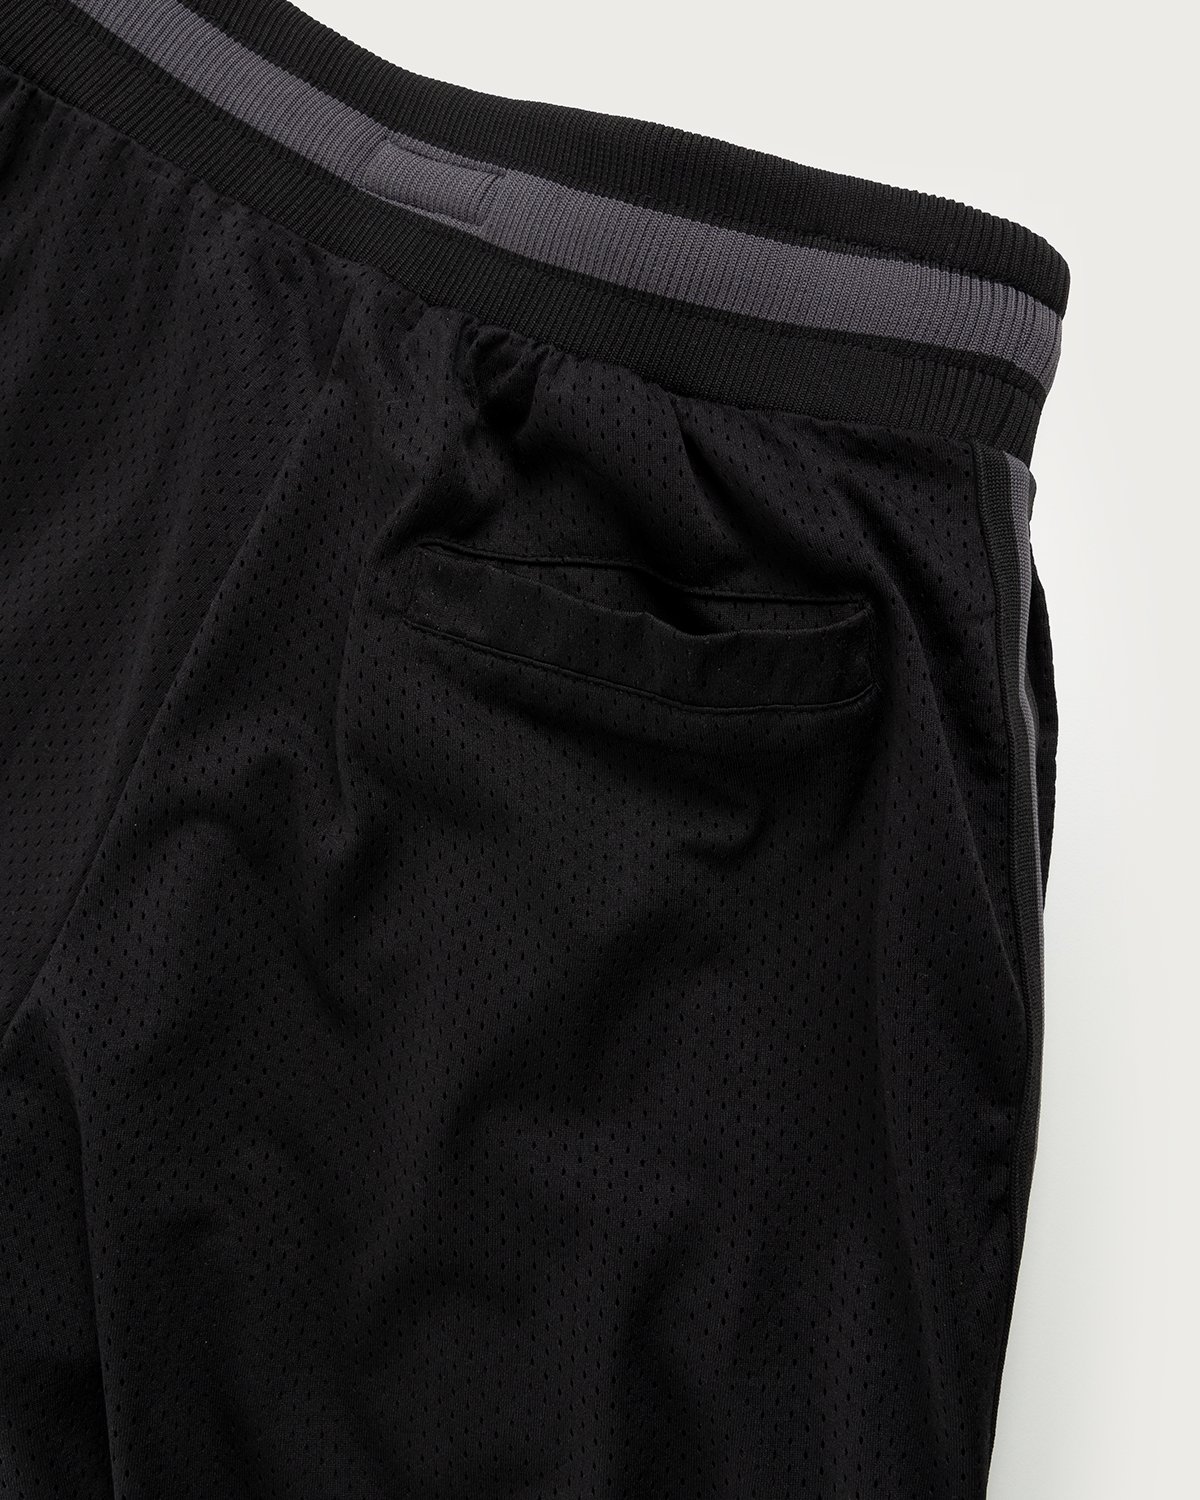 Market x UCLA x Highsnobiety - HS Sports Mesh Bruin Shorts Black - Clothing - Black - Image 4